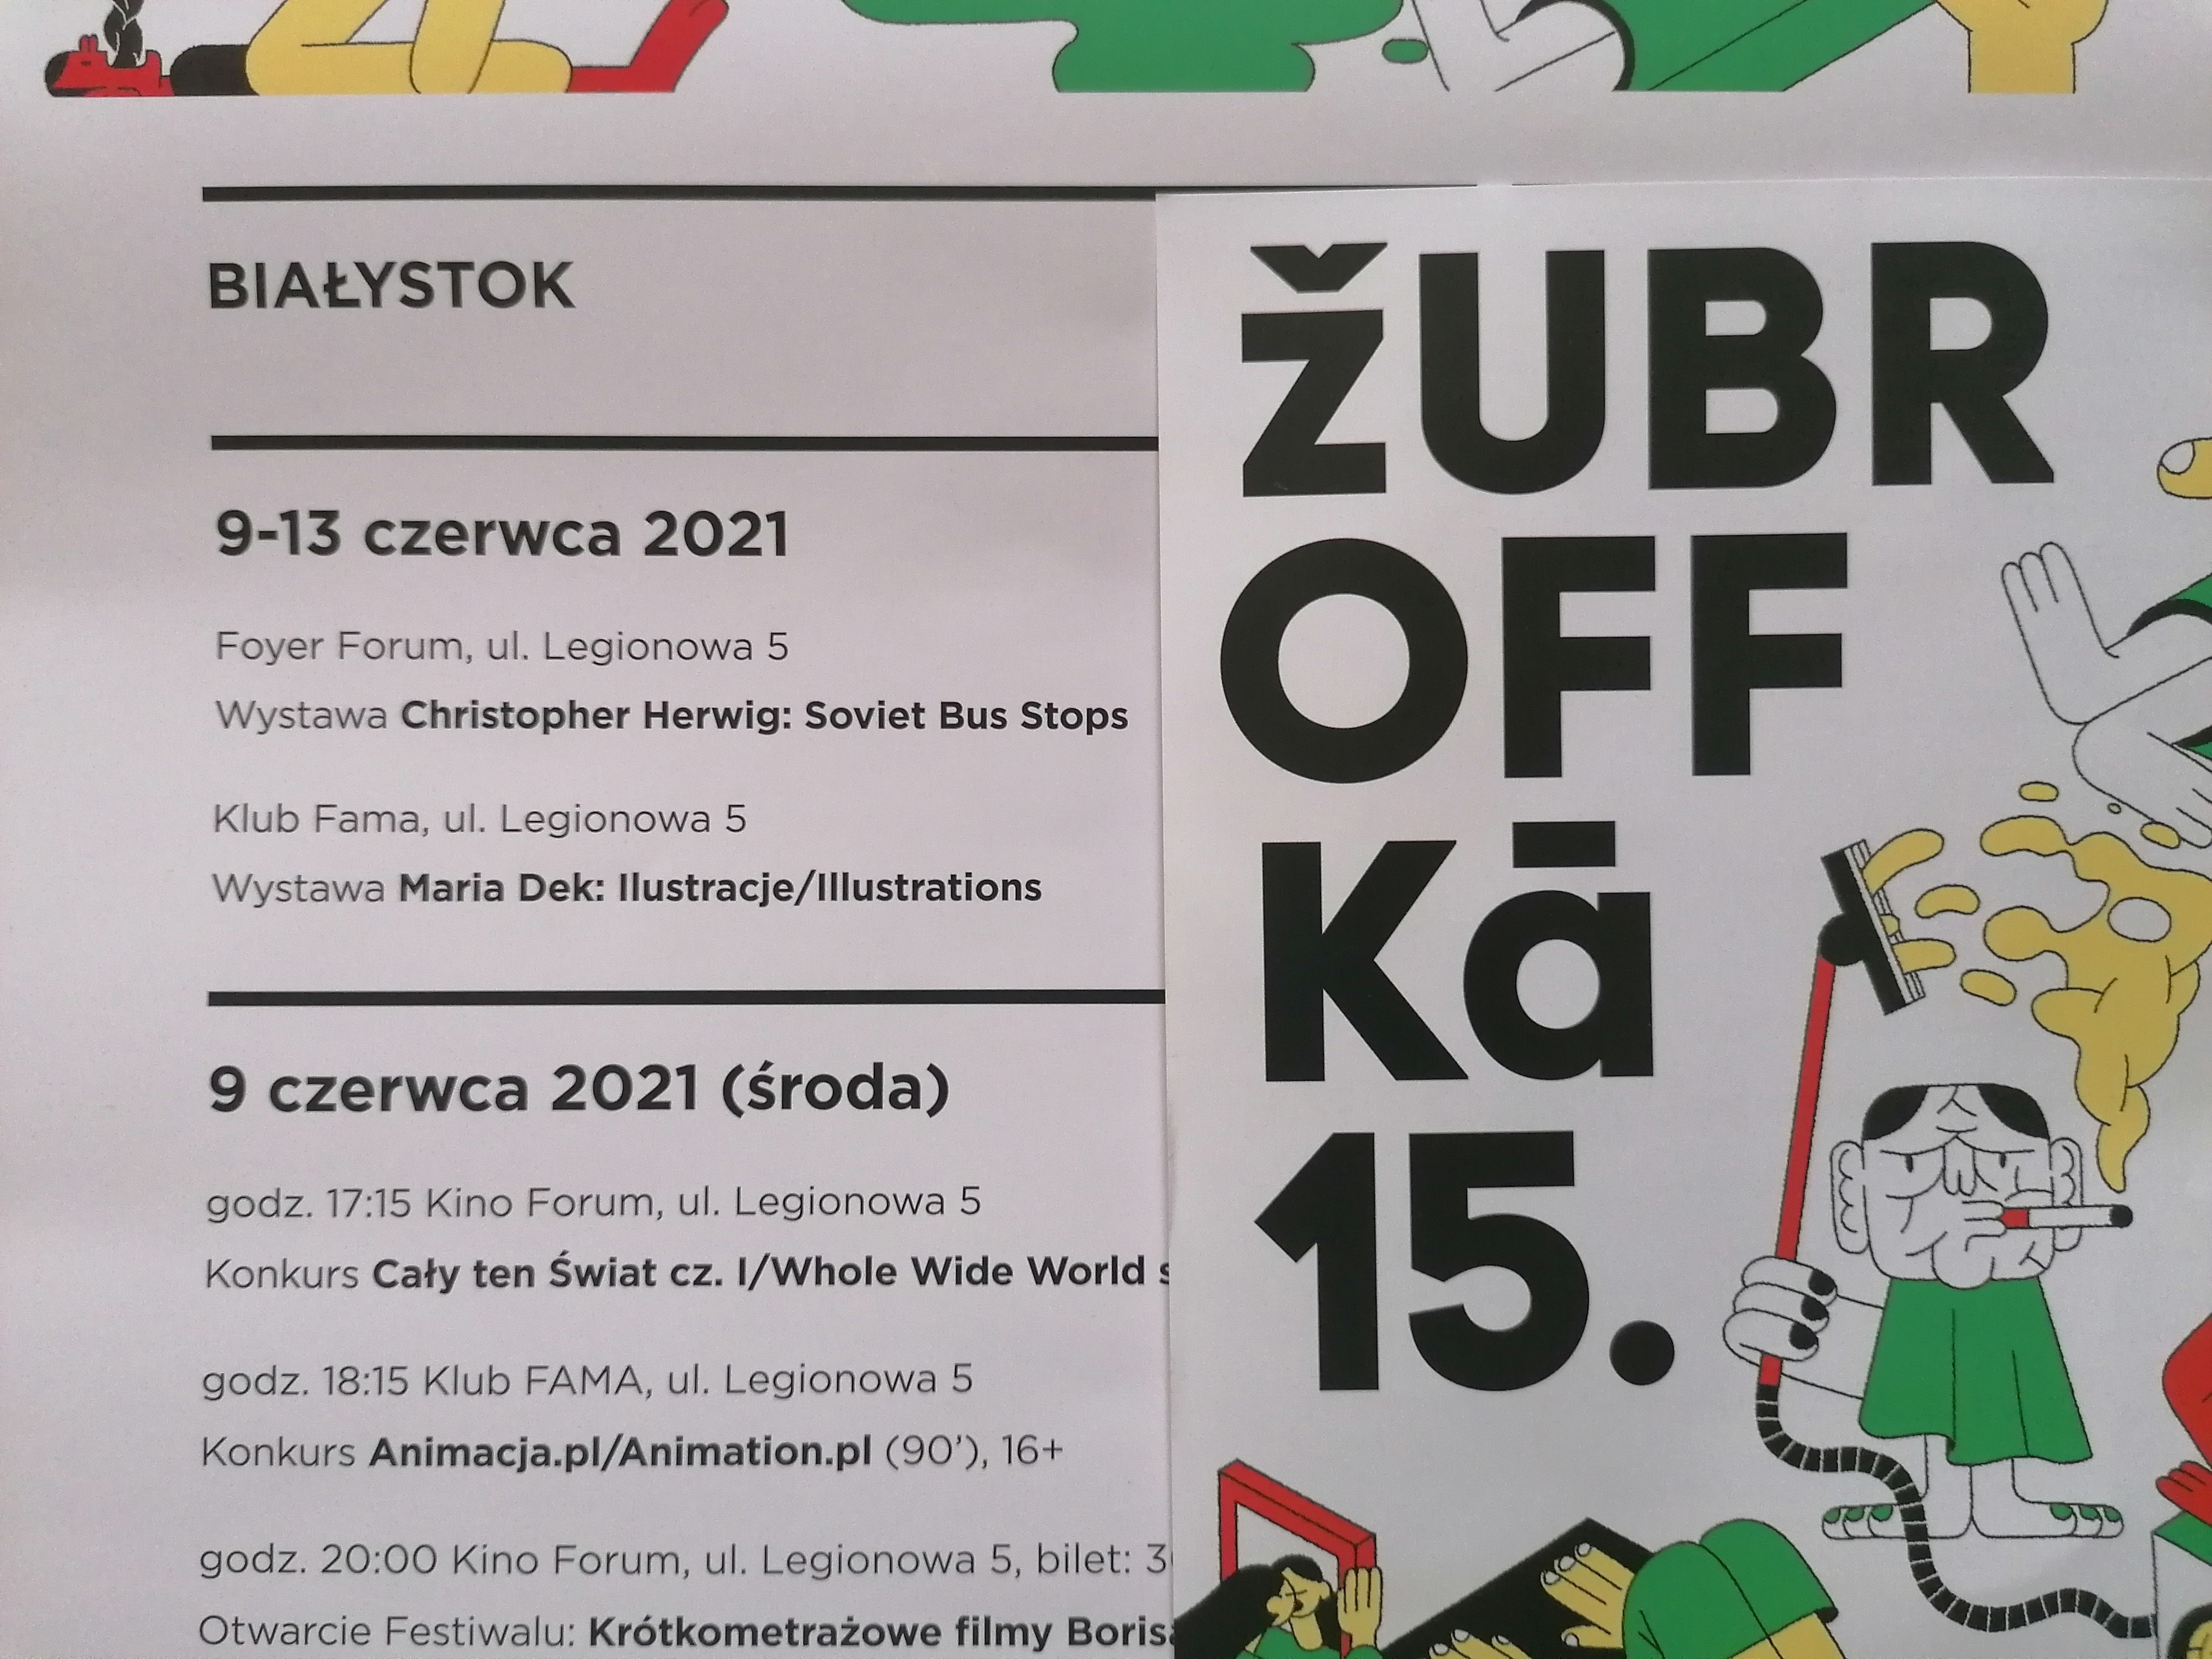 Plakat promujący festiwal Żubroffka